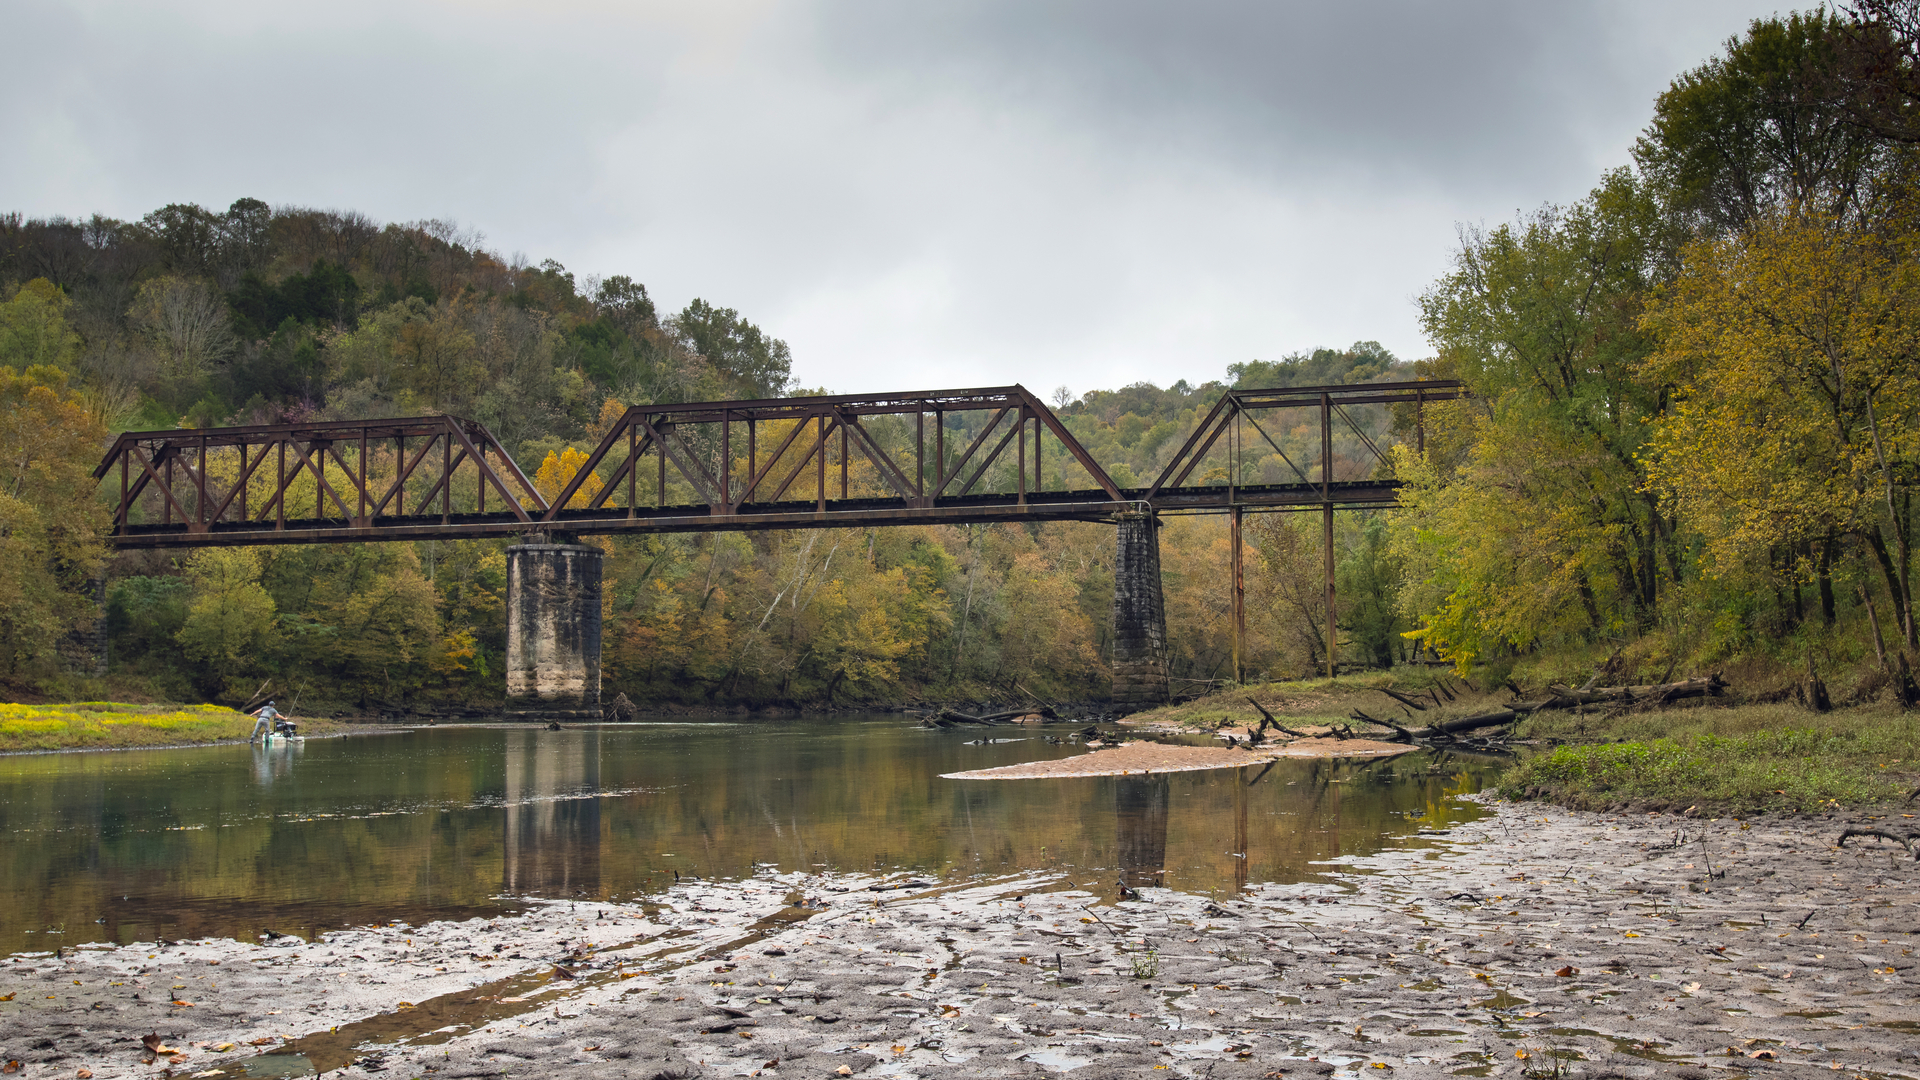 Bridge at the Caney Fork river